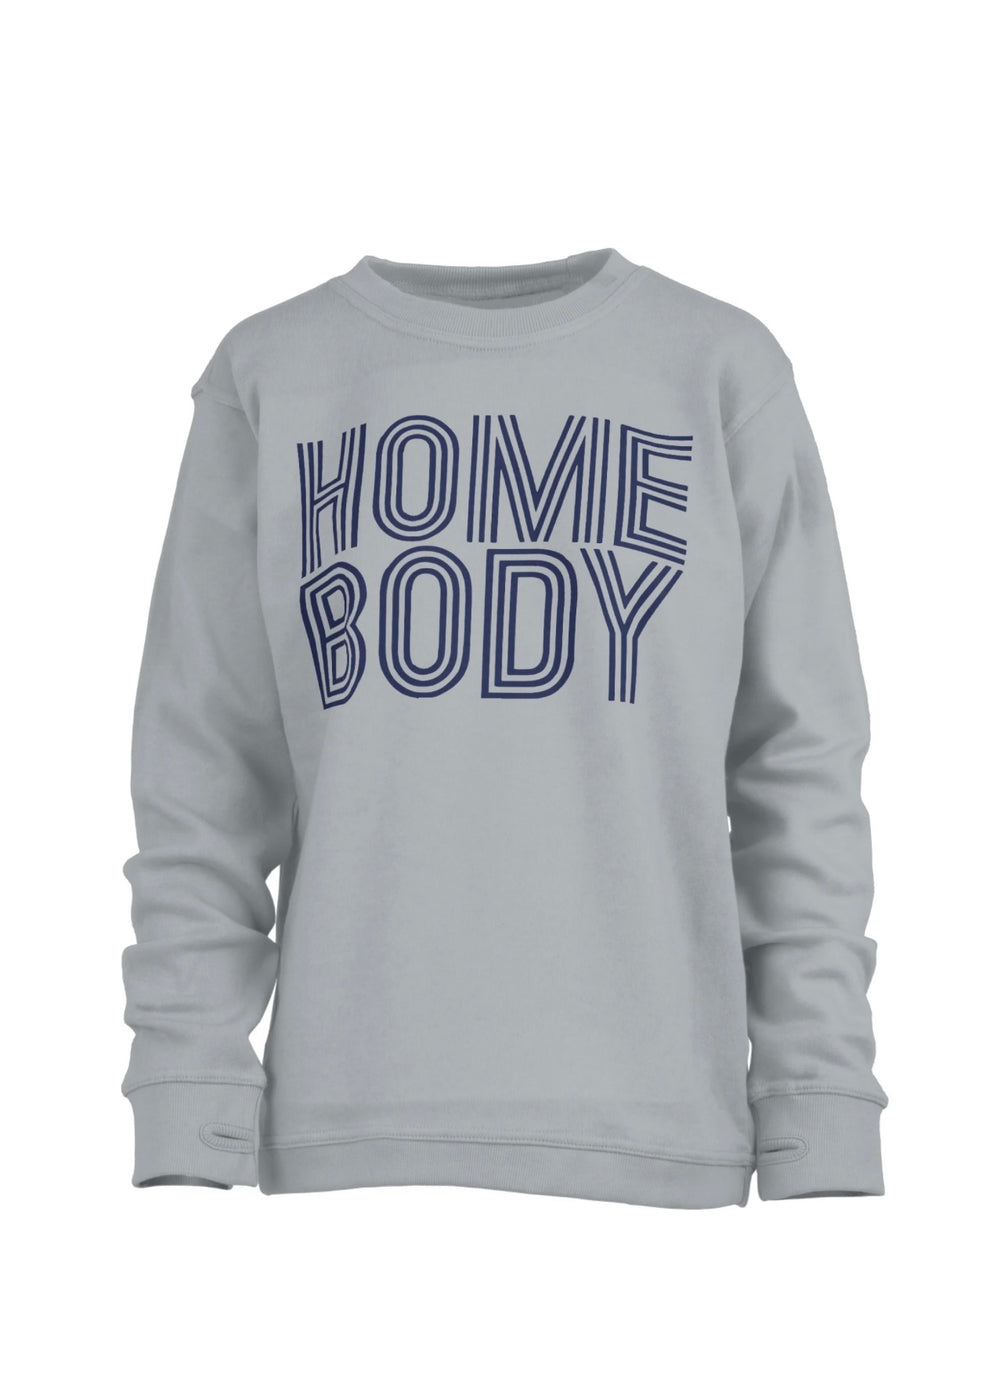 Best Selling Sweatshirts HomeBody